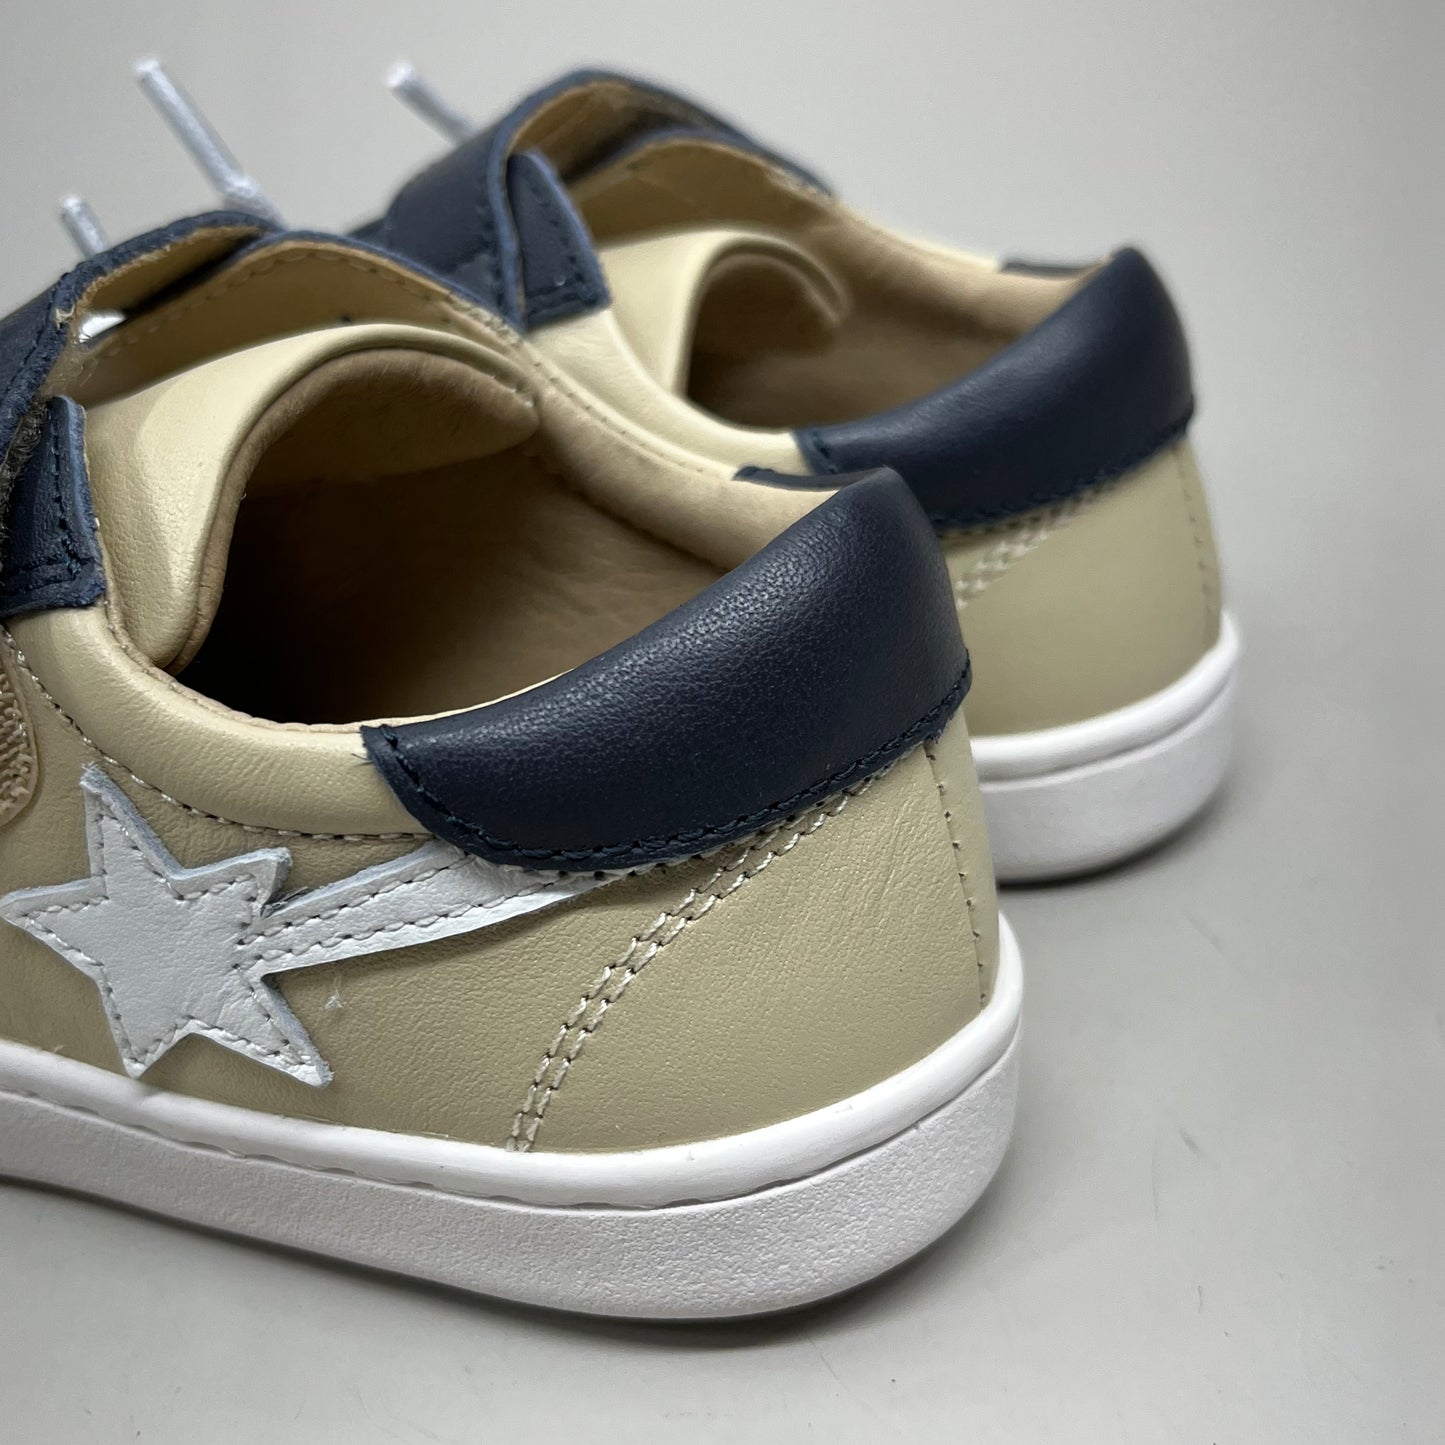 OLD SOLES Runsky Sneakers Leather Shoe Kid’s Sz 27 US 10 Cream/Navy/Snow #6135